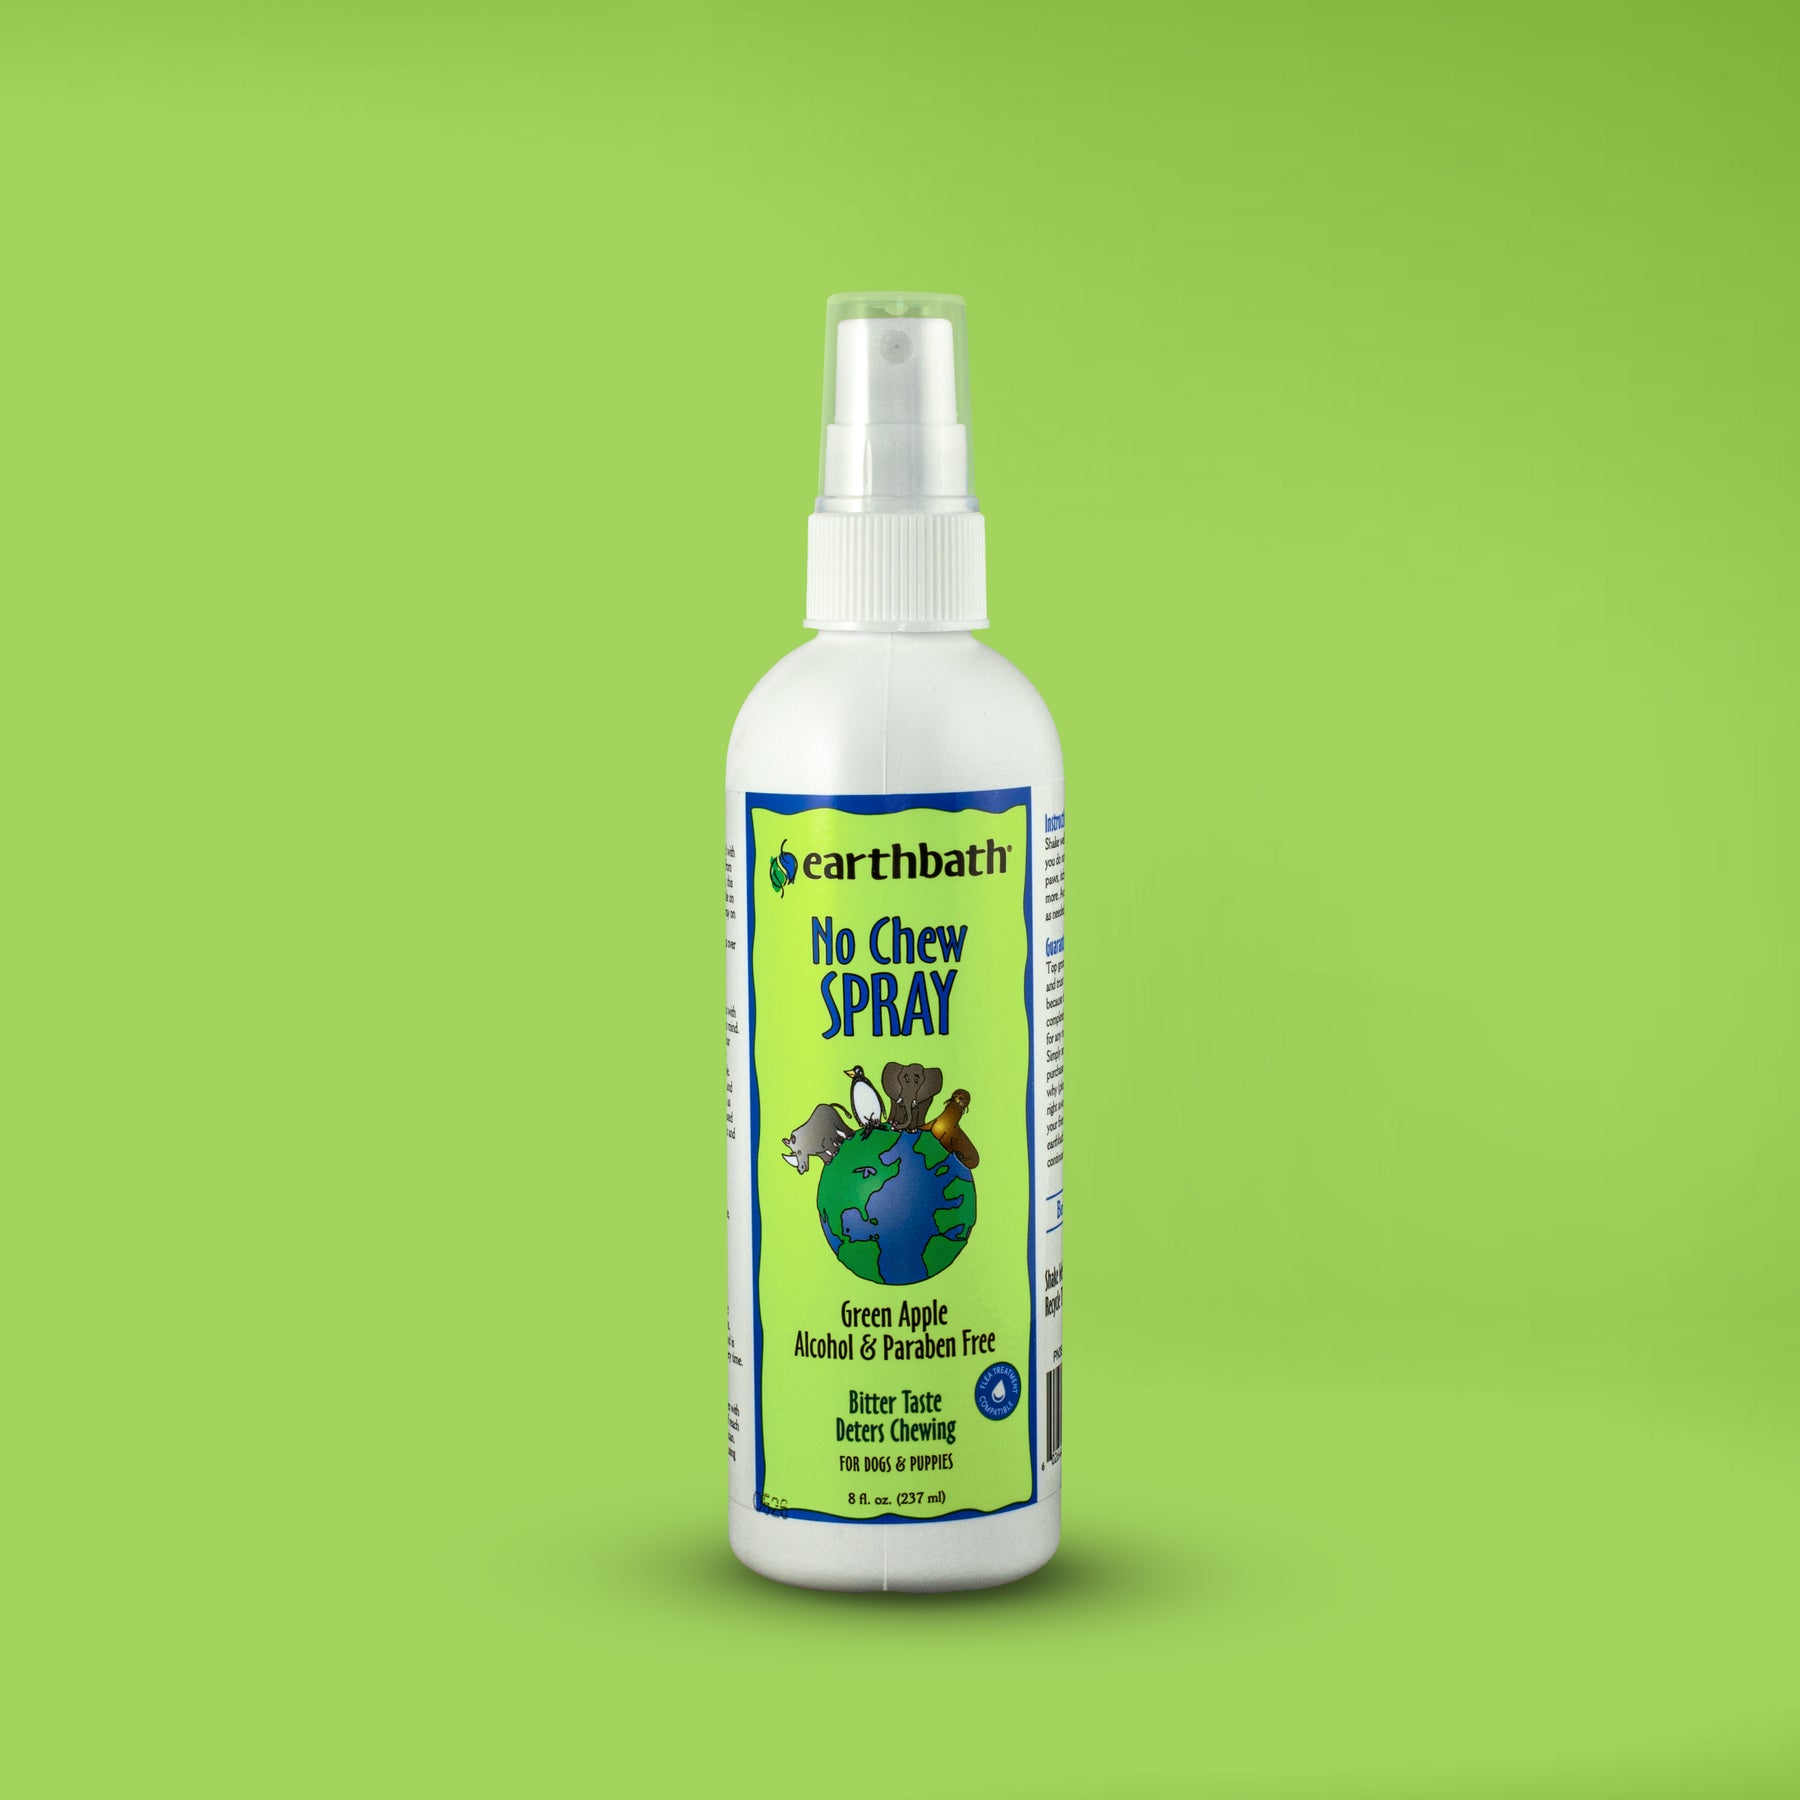 earthbath® No Chew Spray, Green Apple & Bitters, Made in USA, 8 oz